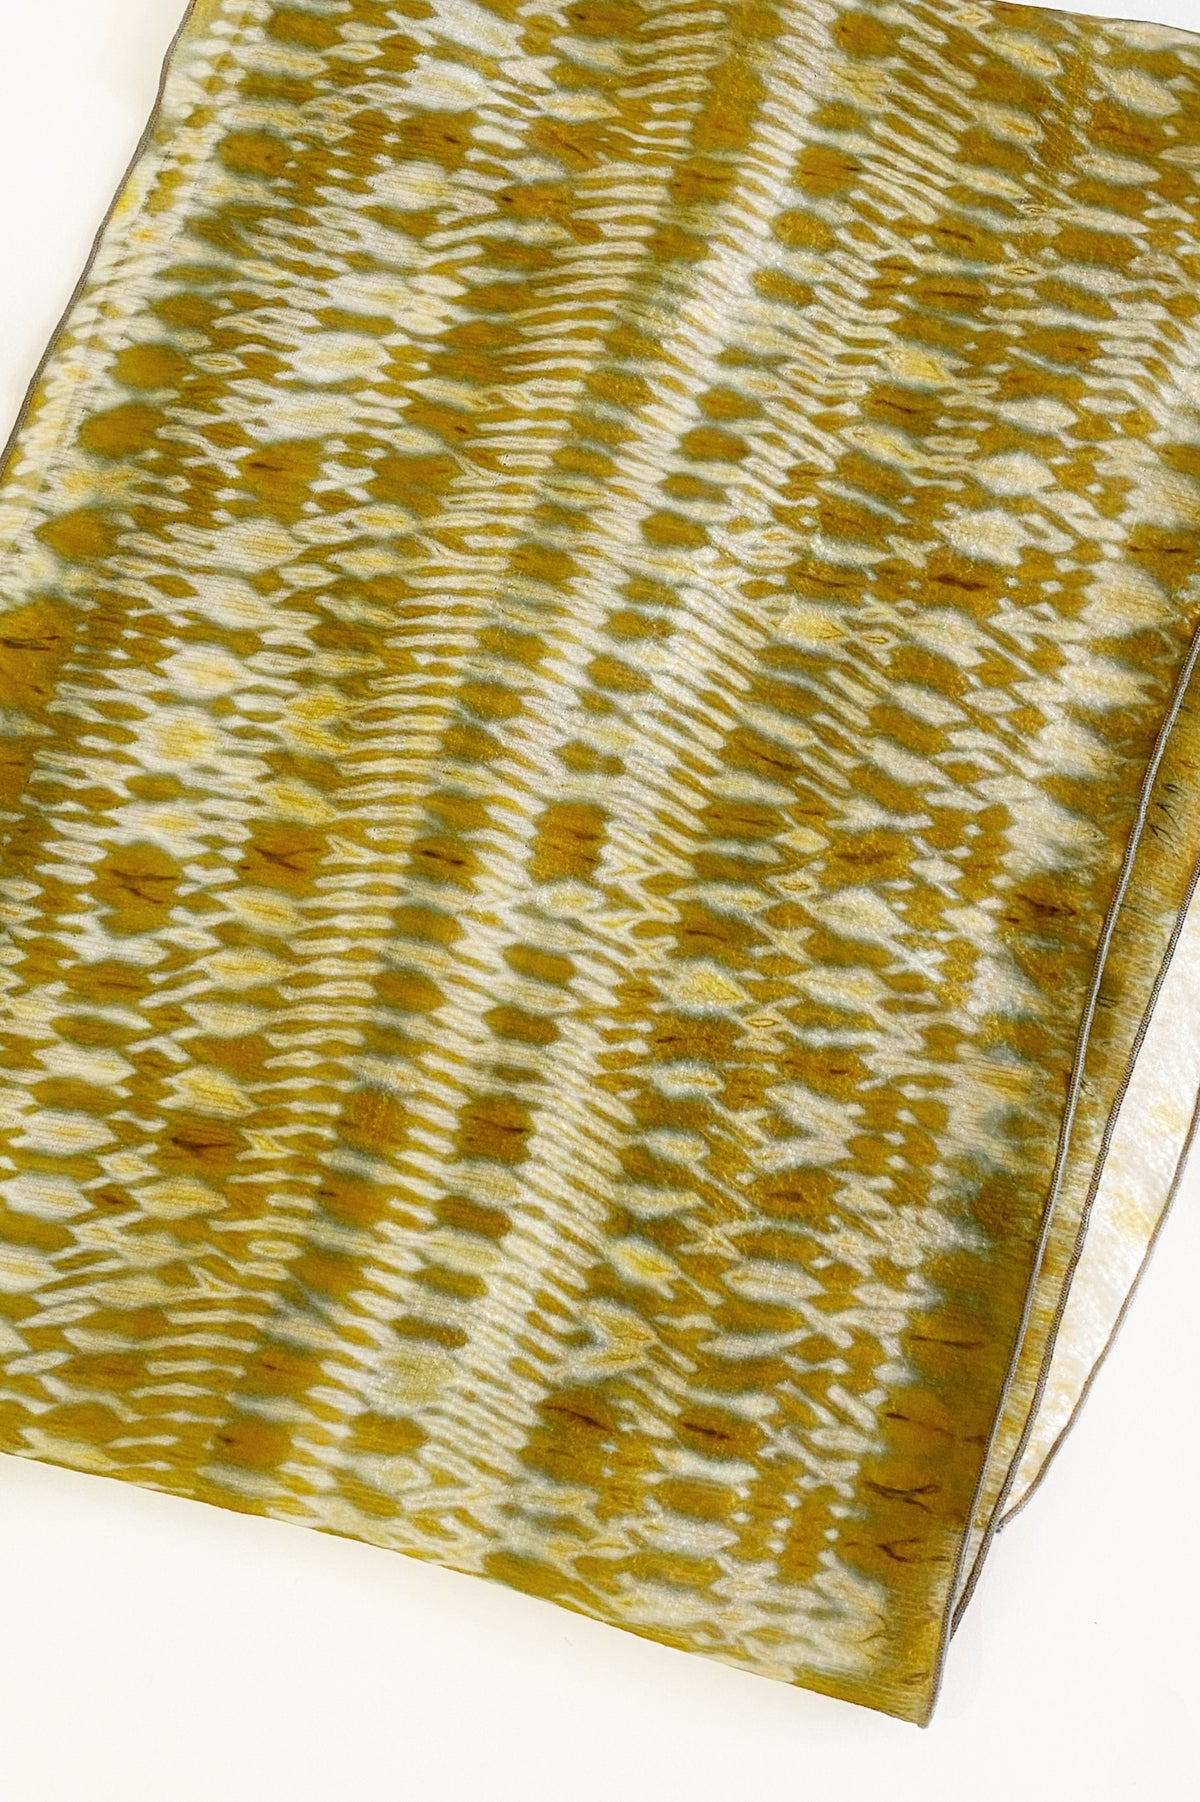 Shibori Dyed Silk Scarf in Mustard & Goldenrod